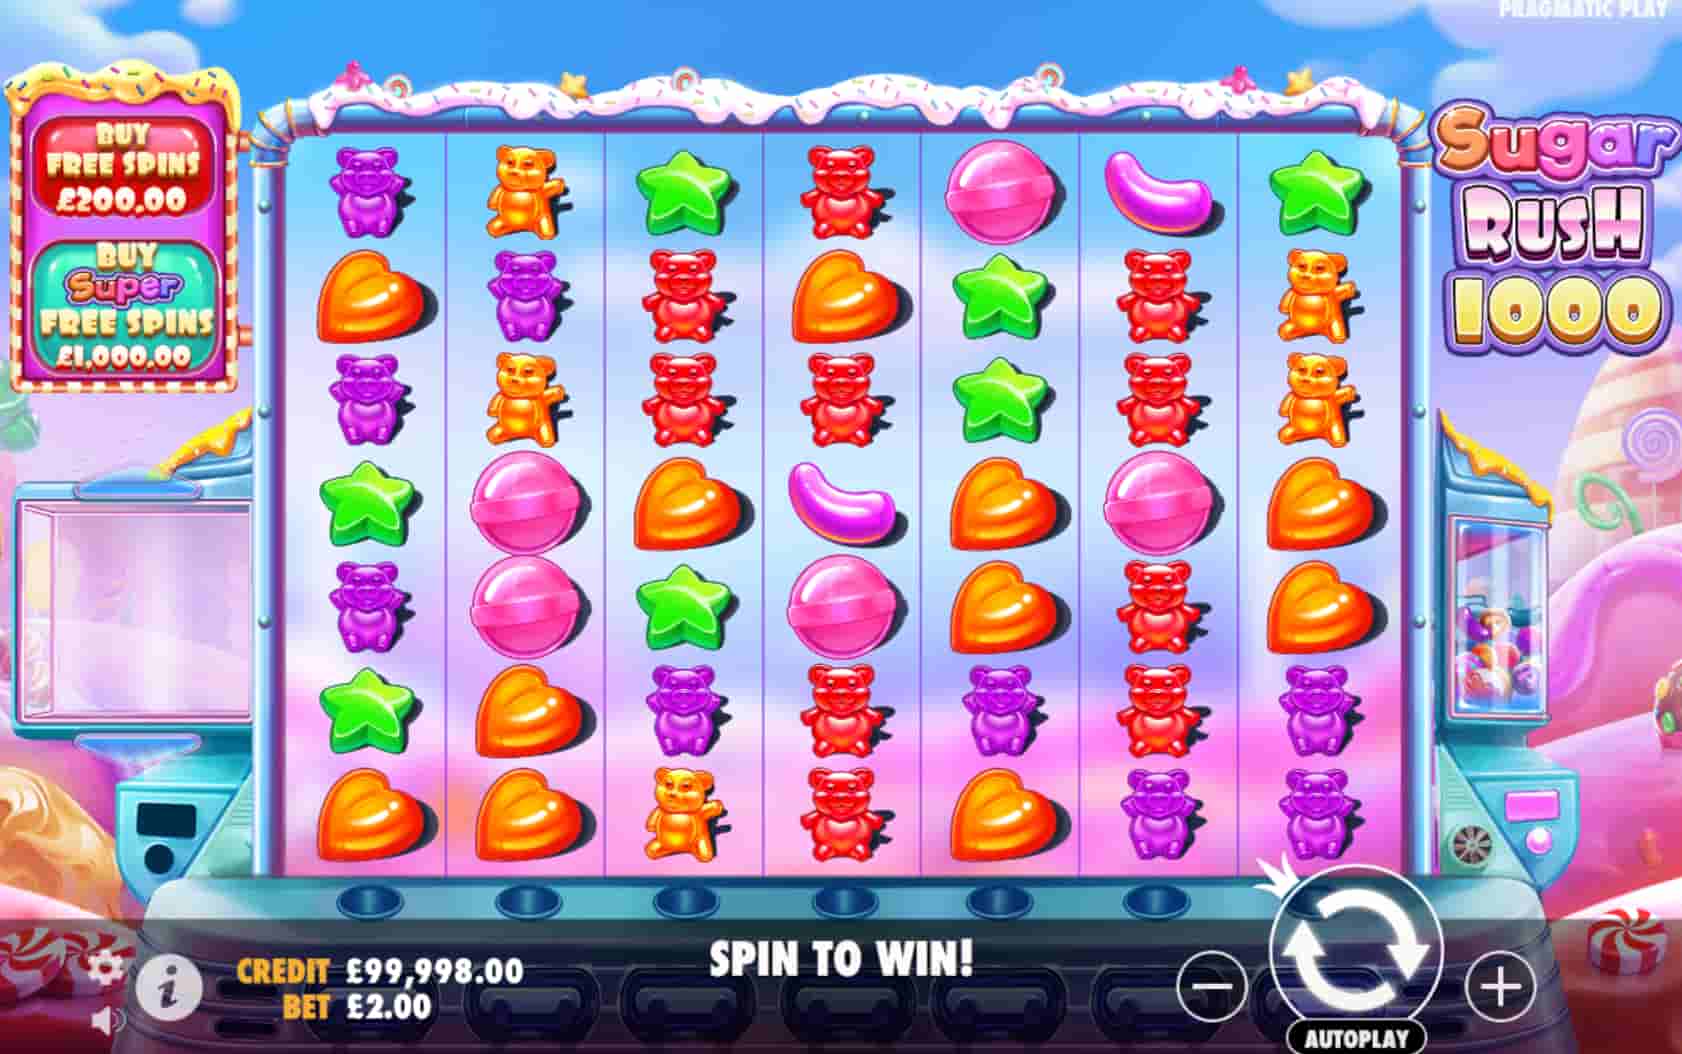 Sugar Rush 1000 screenshot 3